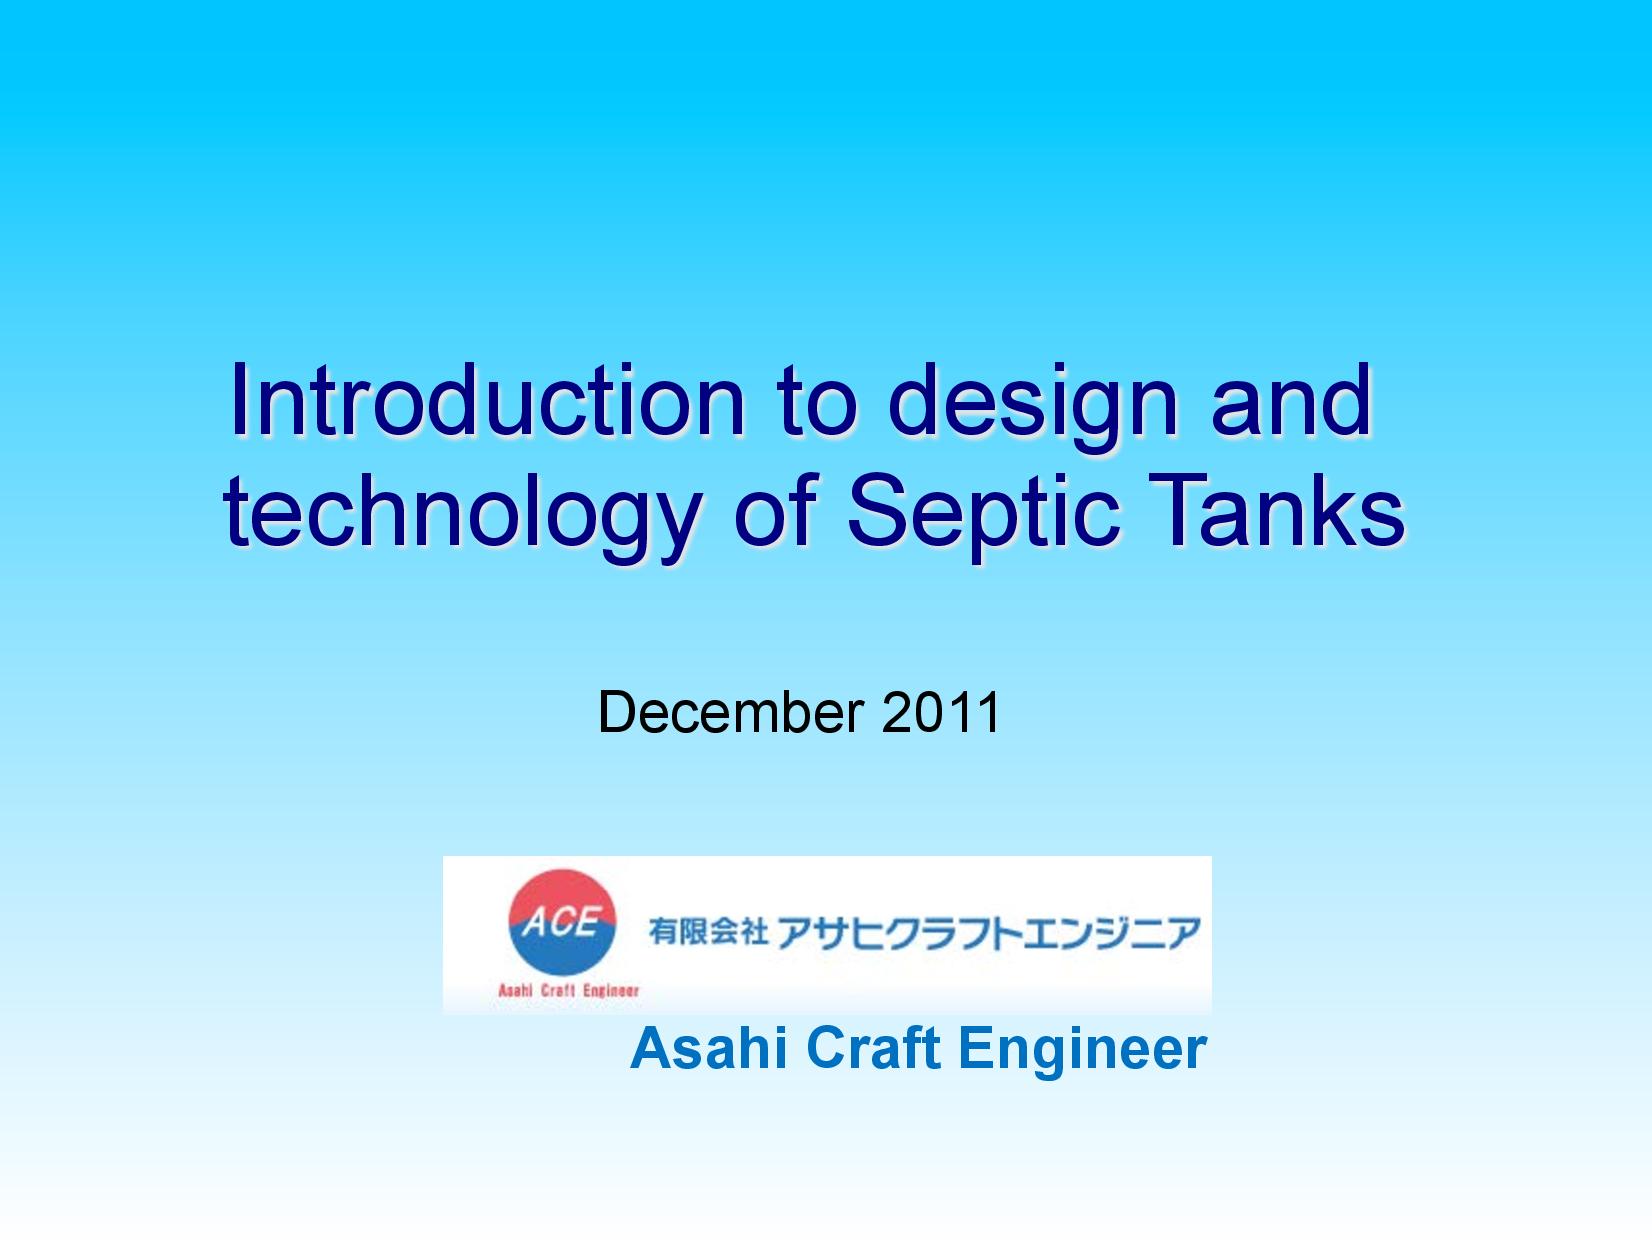 Asahi Craft Engineer: Design and Technology of Septic Tanks